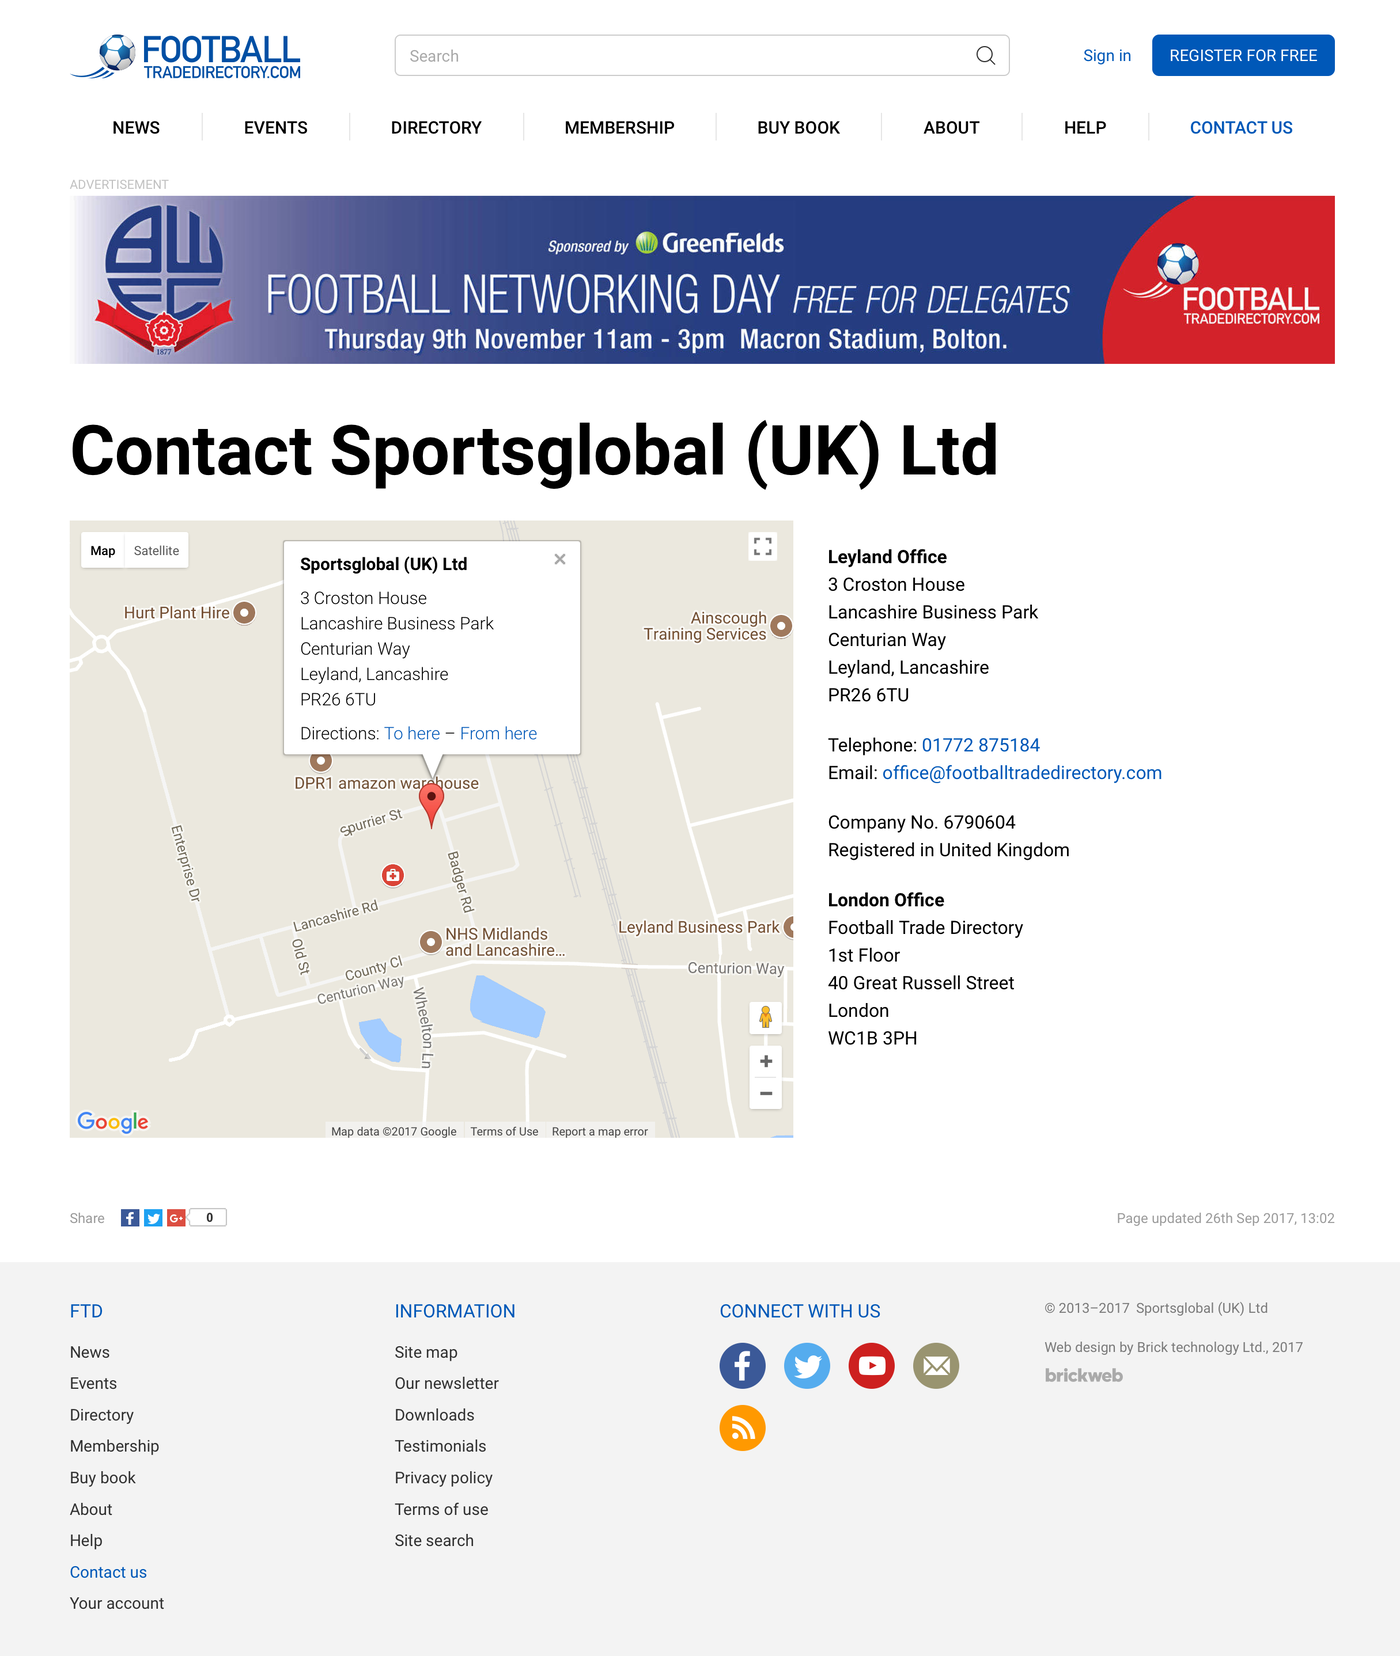 Football Trade Directory Contact us